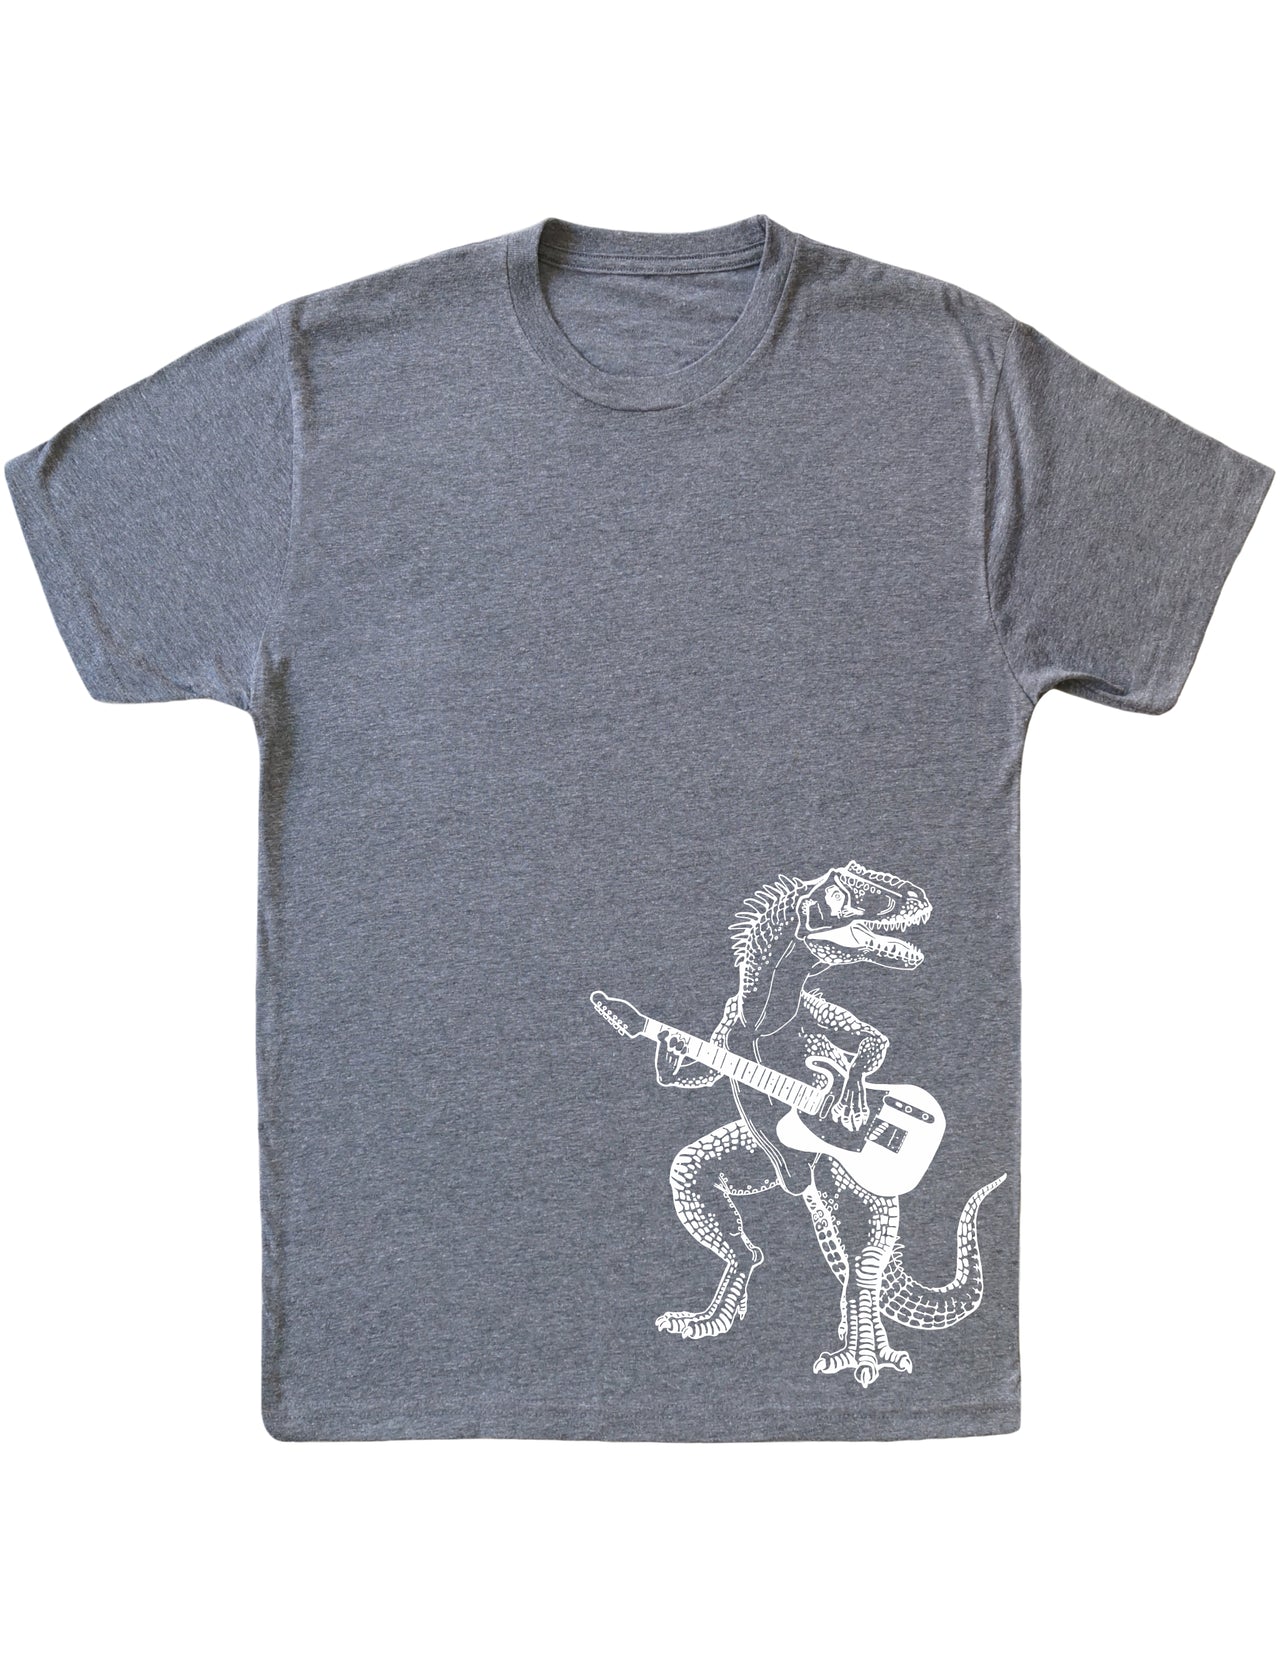 SEEMBO Dinosaur Playing Guitar Funny Guitarist Misician Men Tri-Blend T-Shirt Side Print